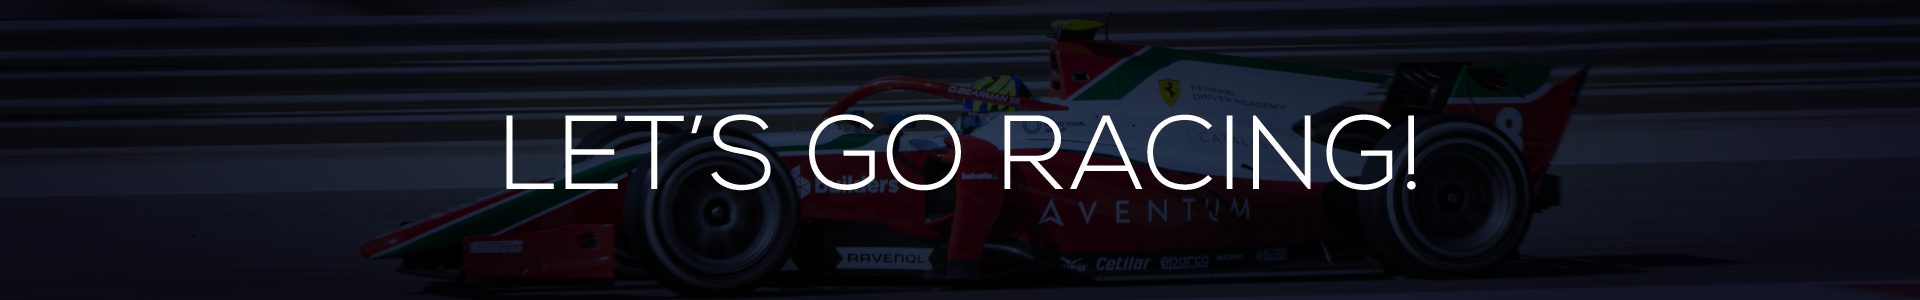 Lets-go-racing-Banner